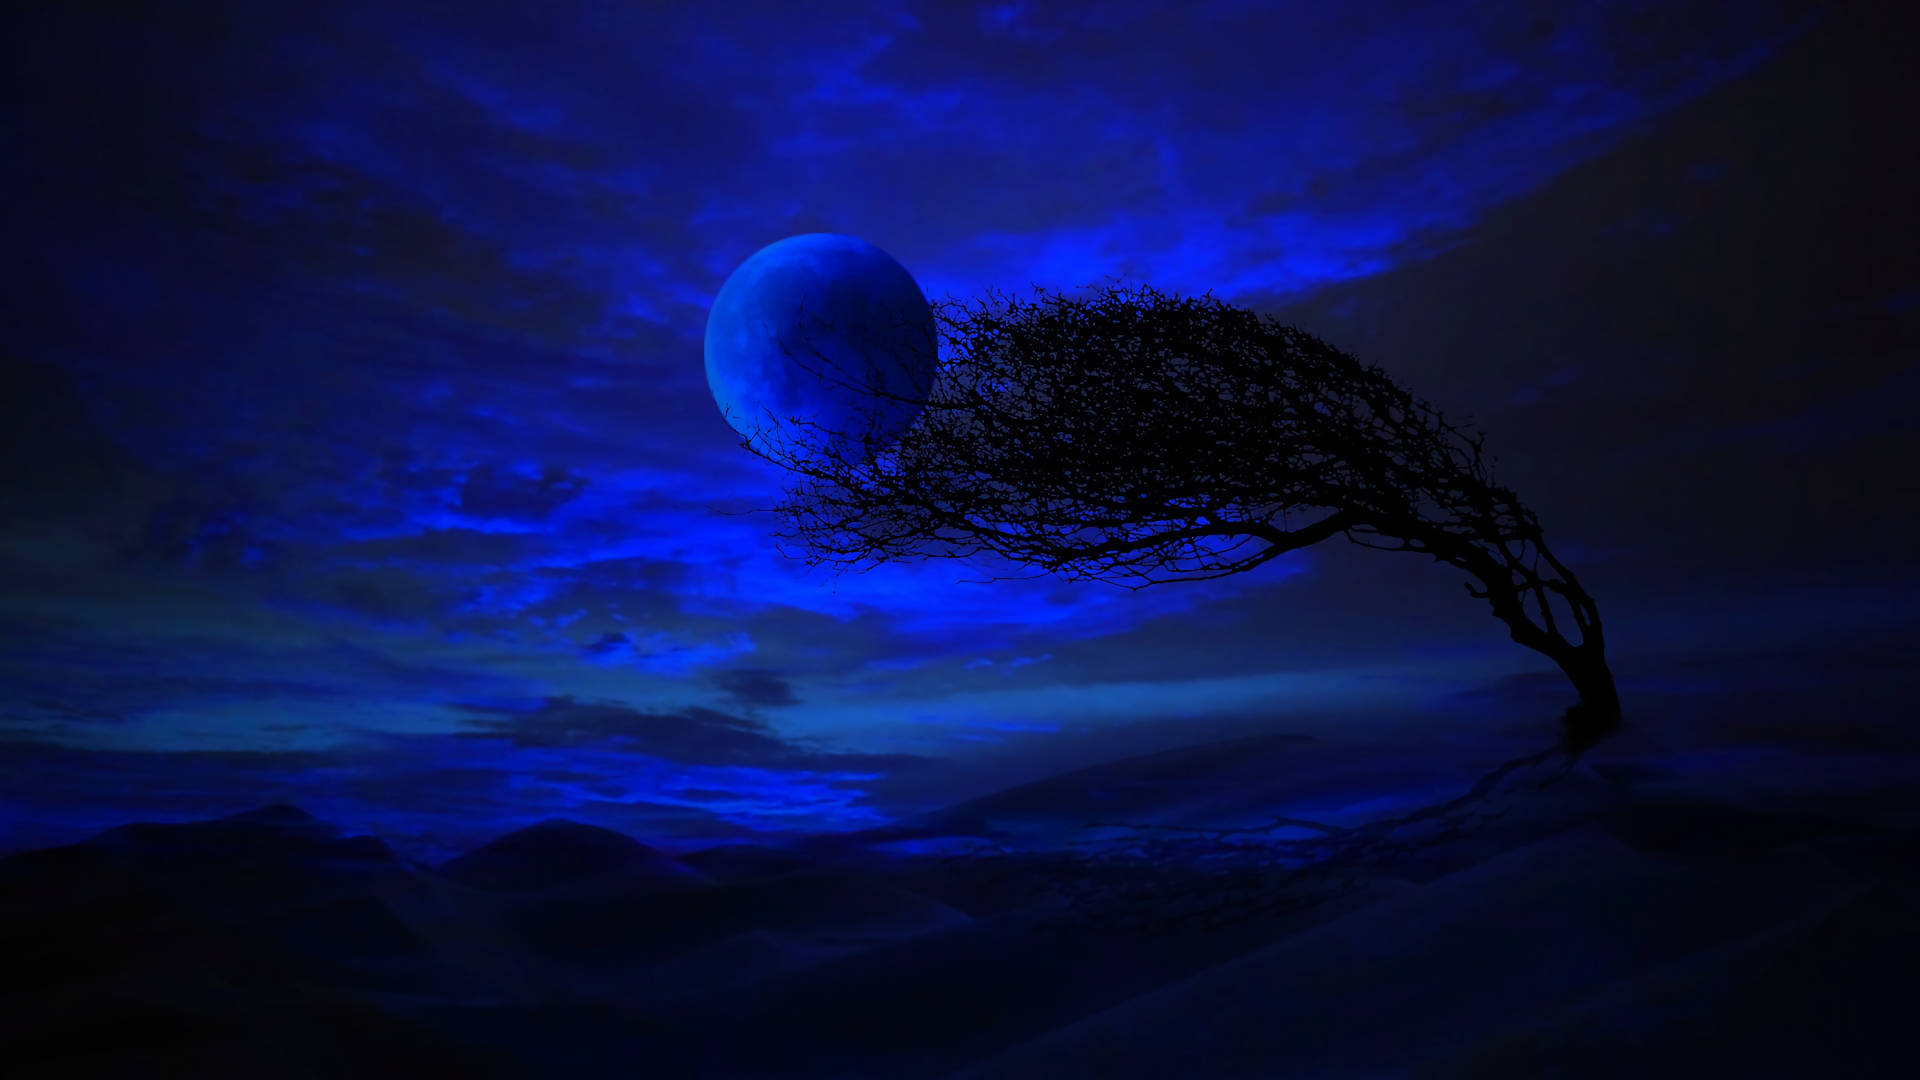 Artistic Blue-themed Hd Moon